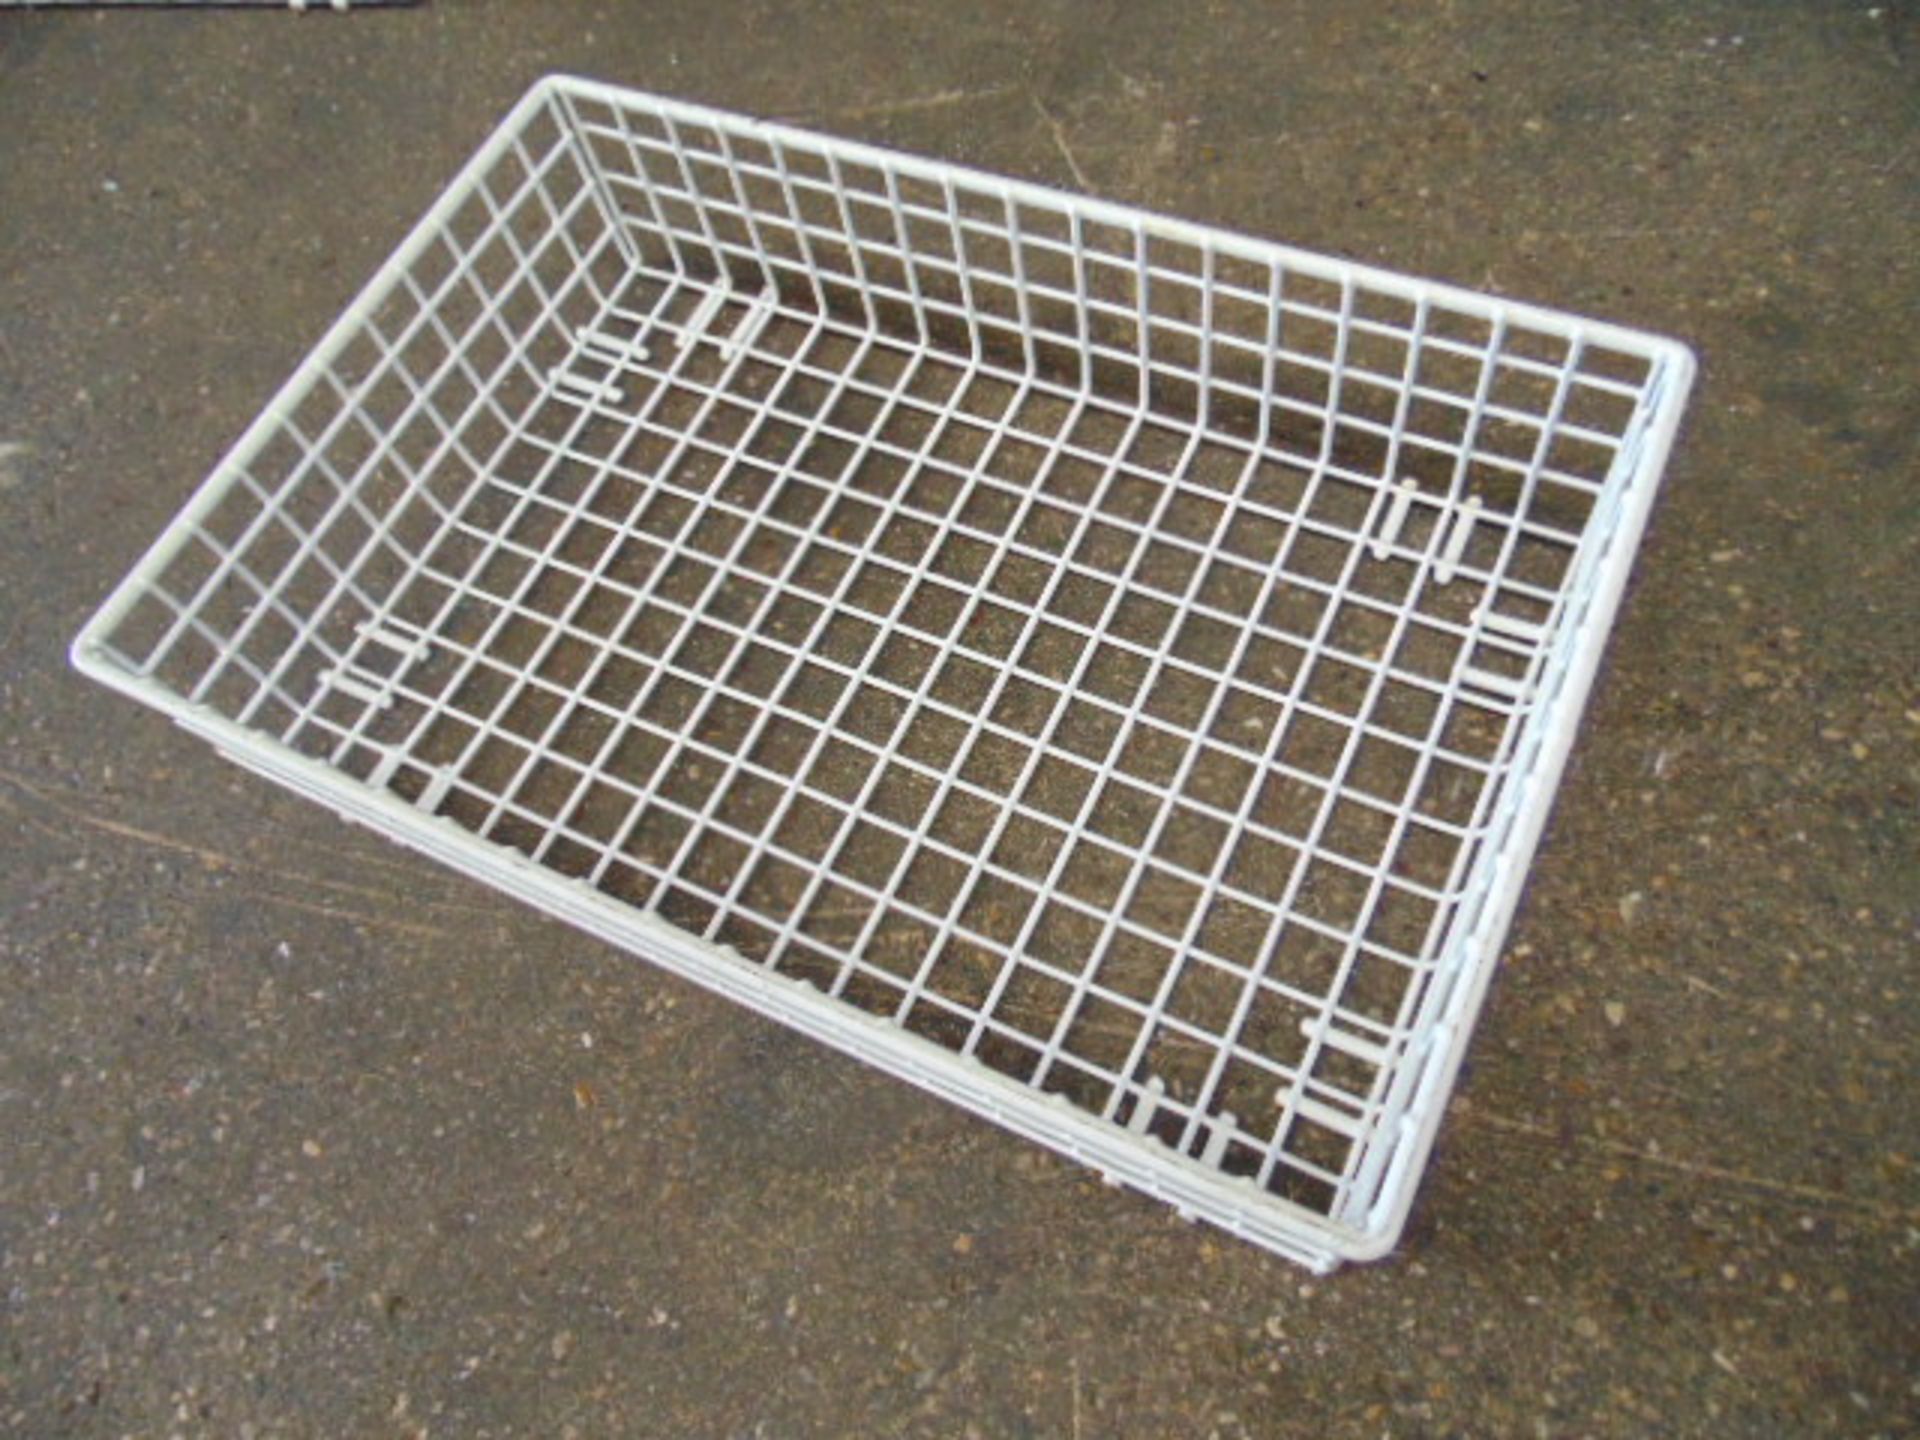 9 x Metal Storage Cage Trays - Image 5 of 6